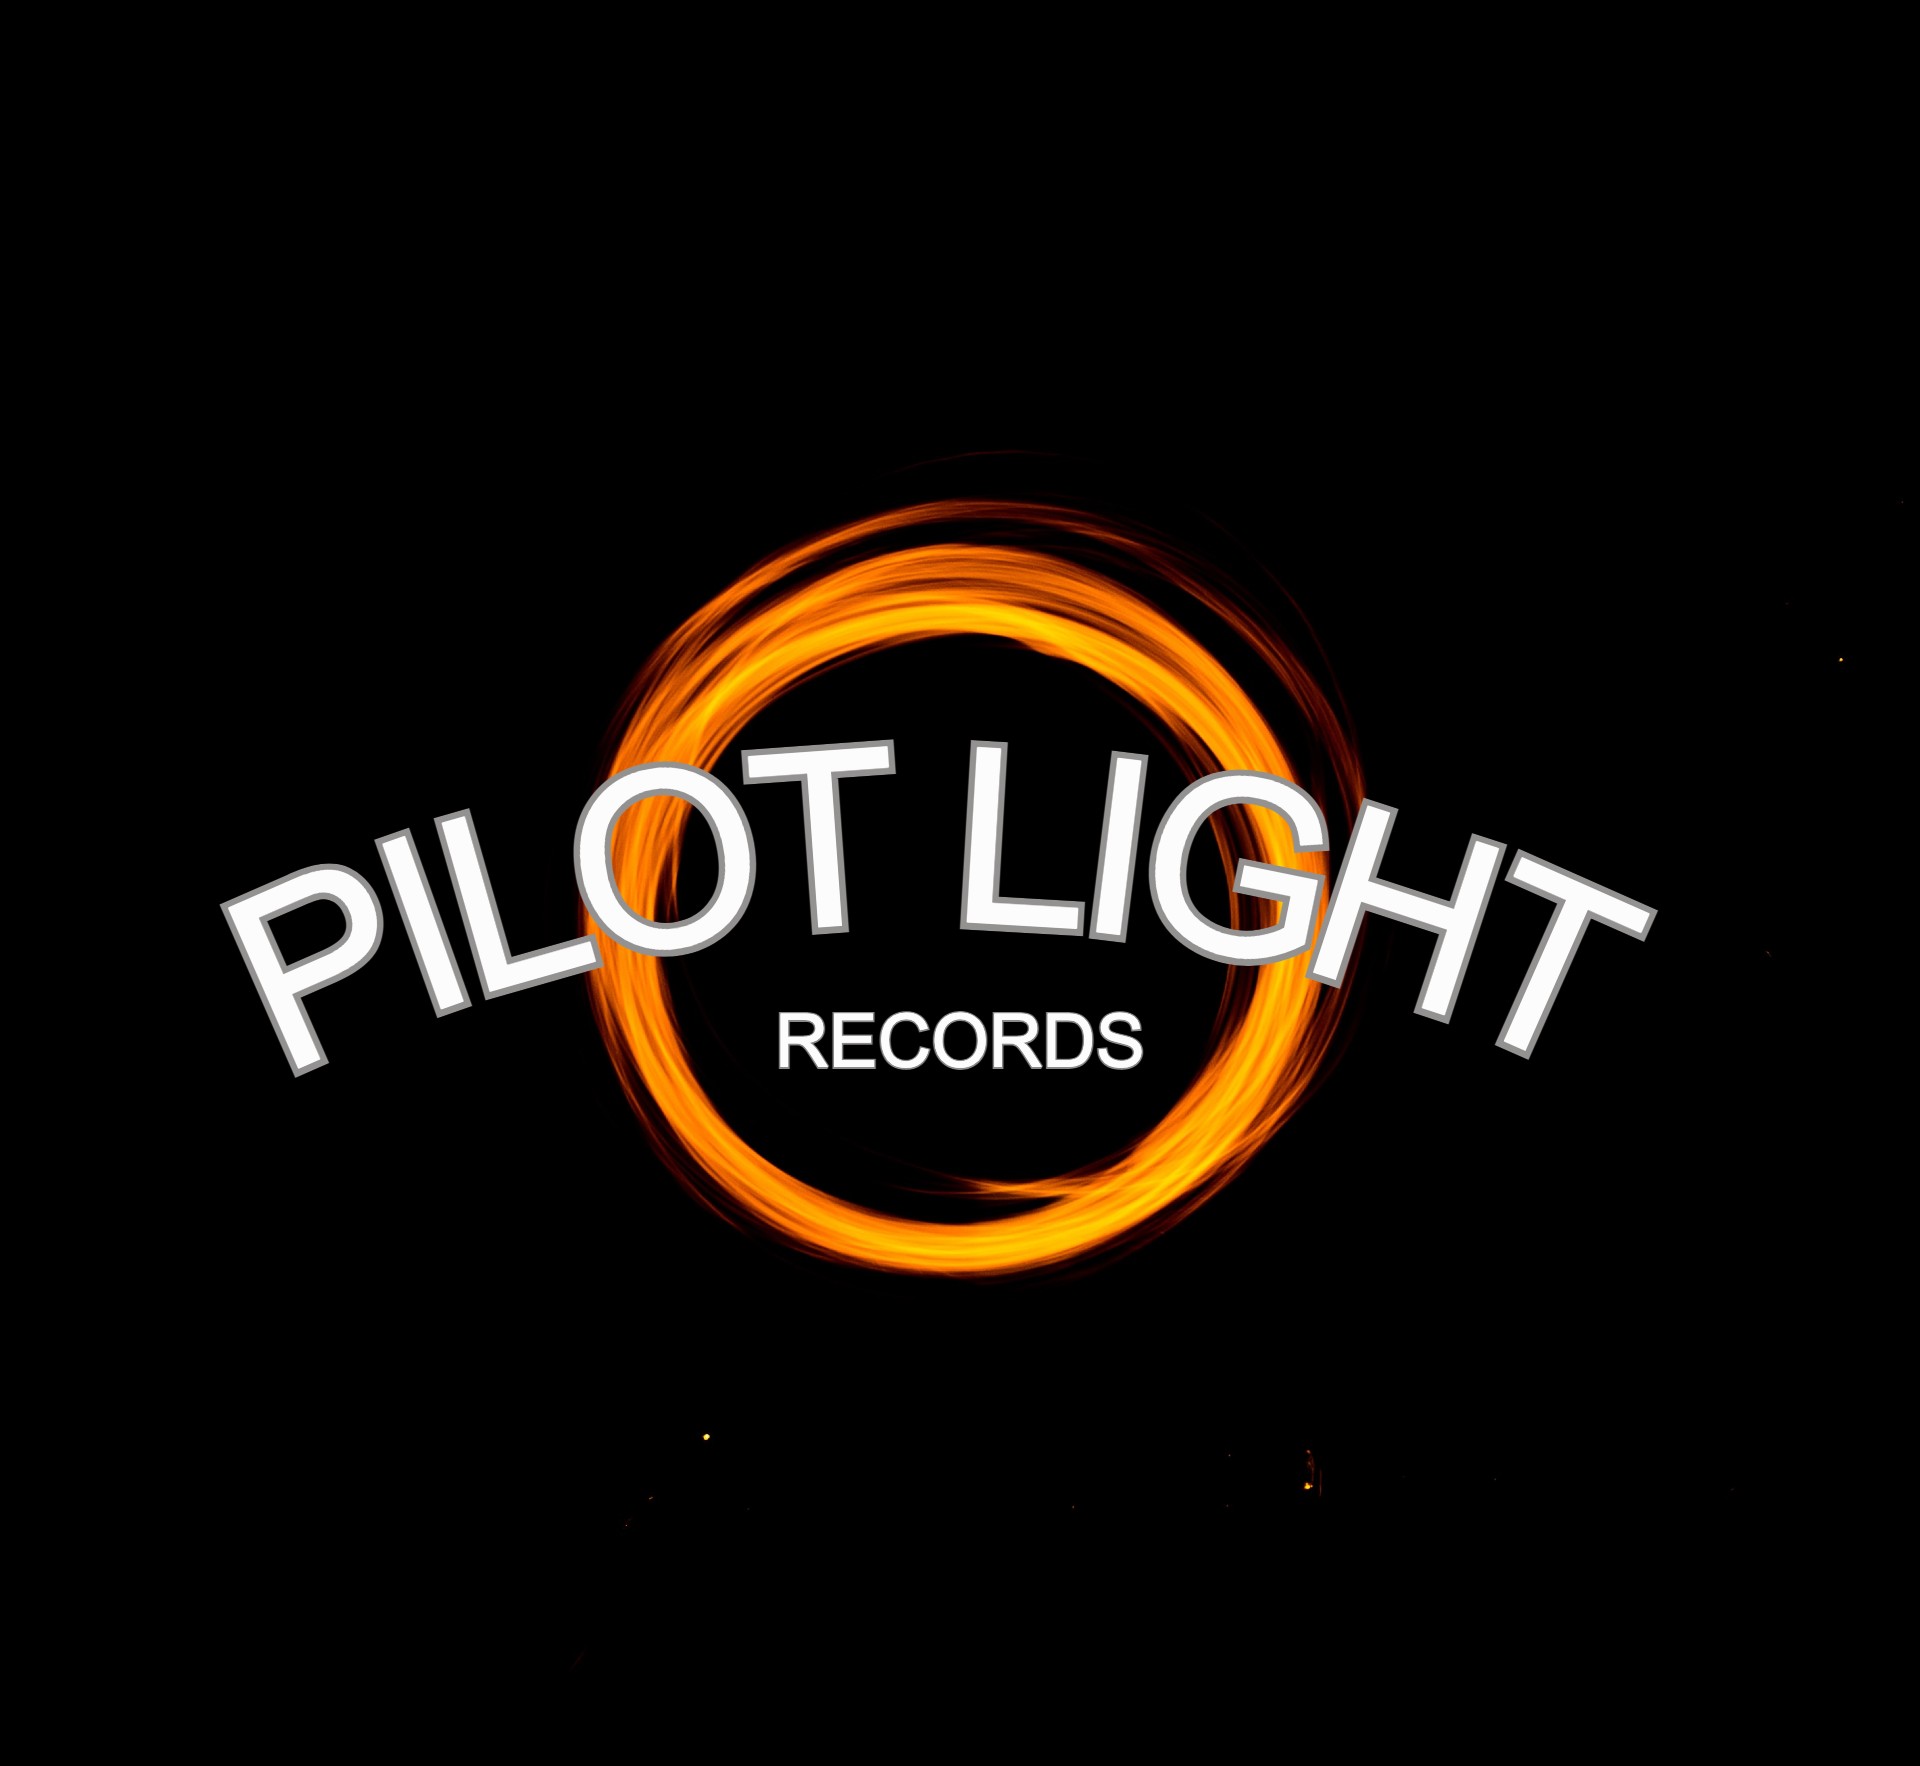 PILOT LIGHT RECORDS